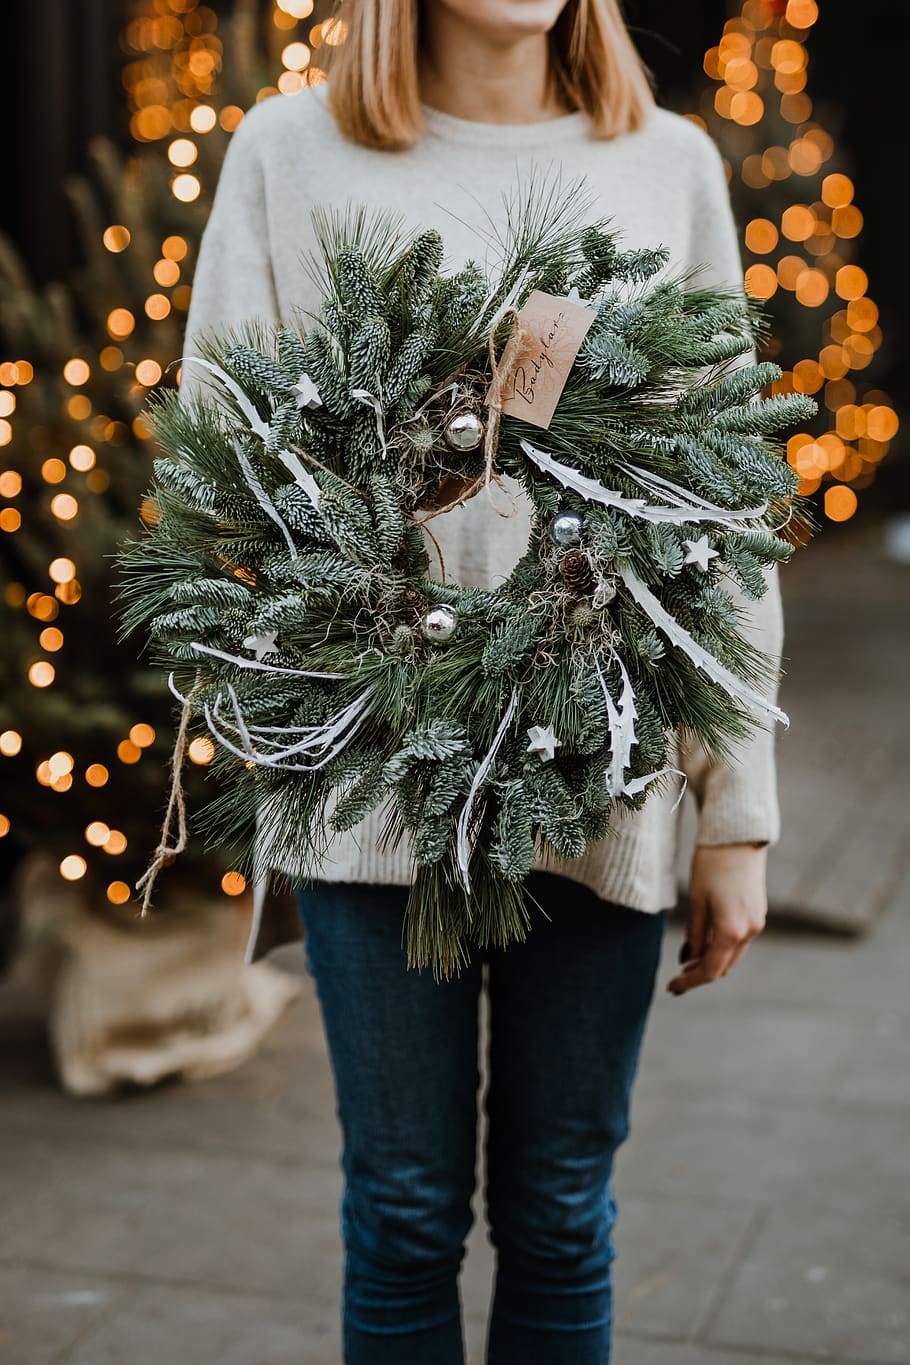 wreath, woman, xmas, december, christmas lights, bokeh, holding, Christmas, hands, celebration